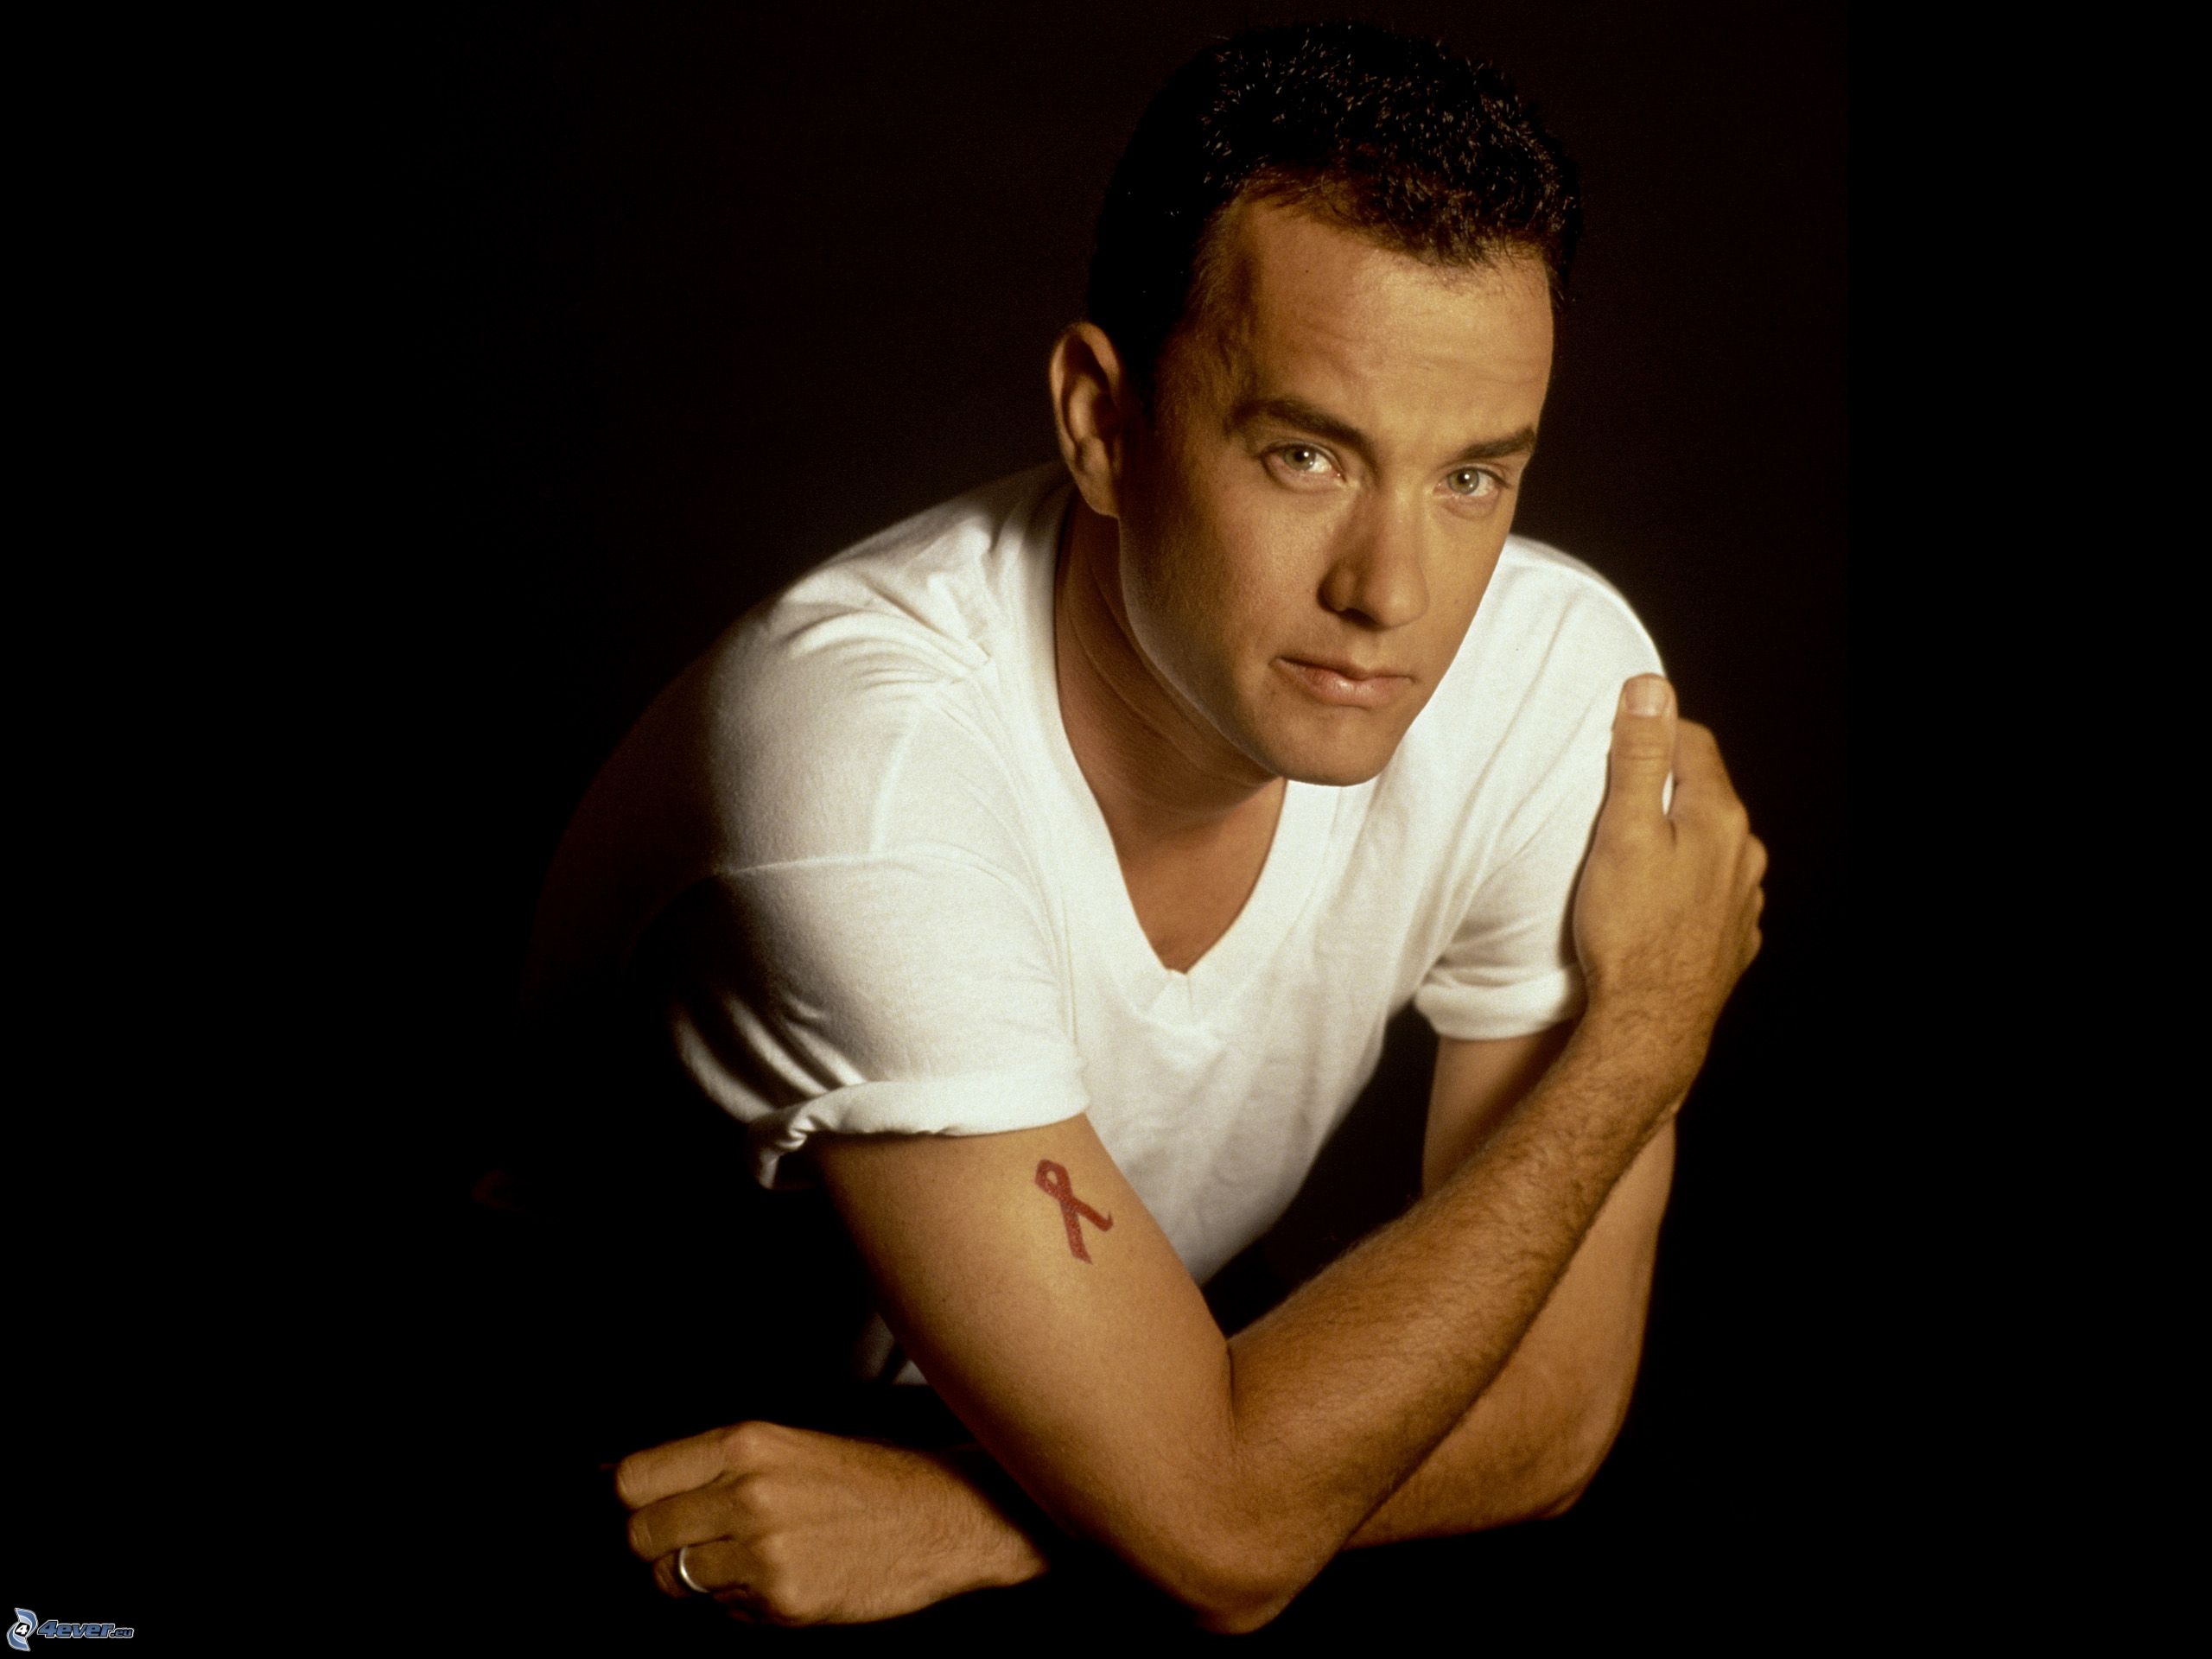 Young pics of Tom Hanks